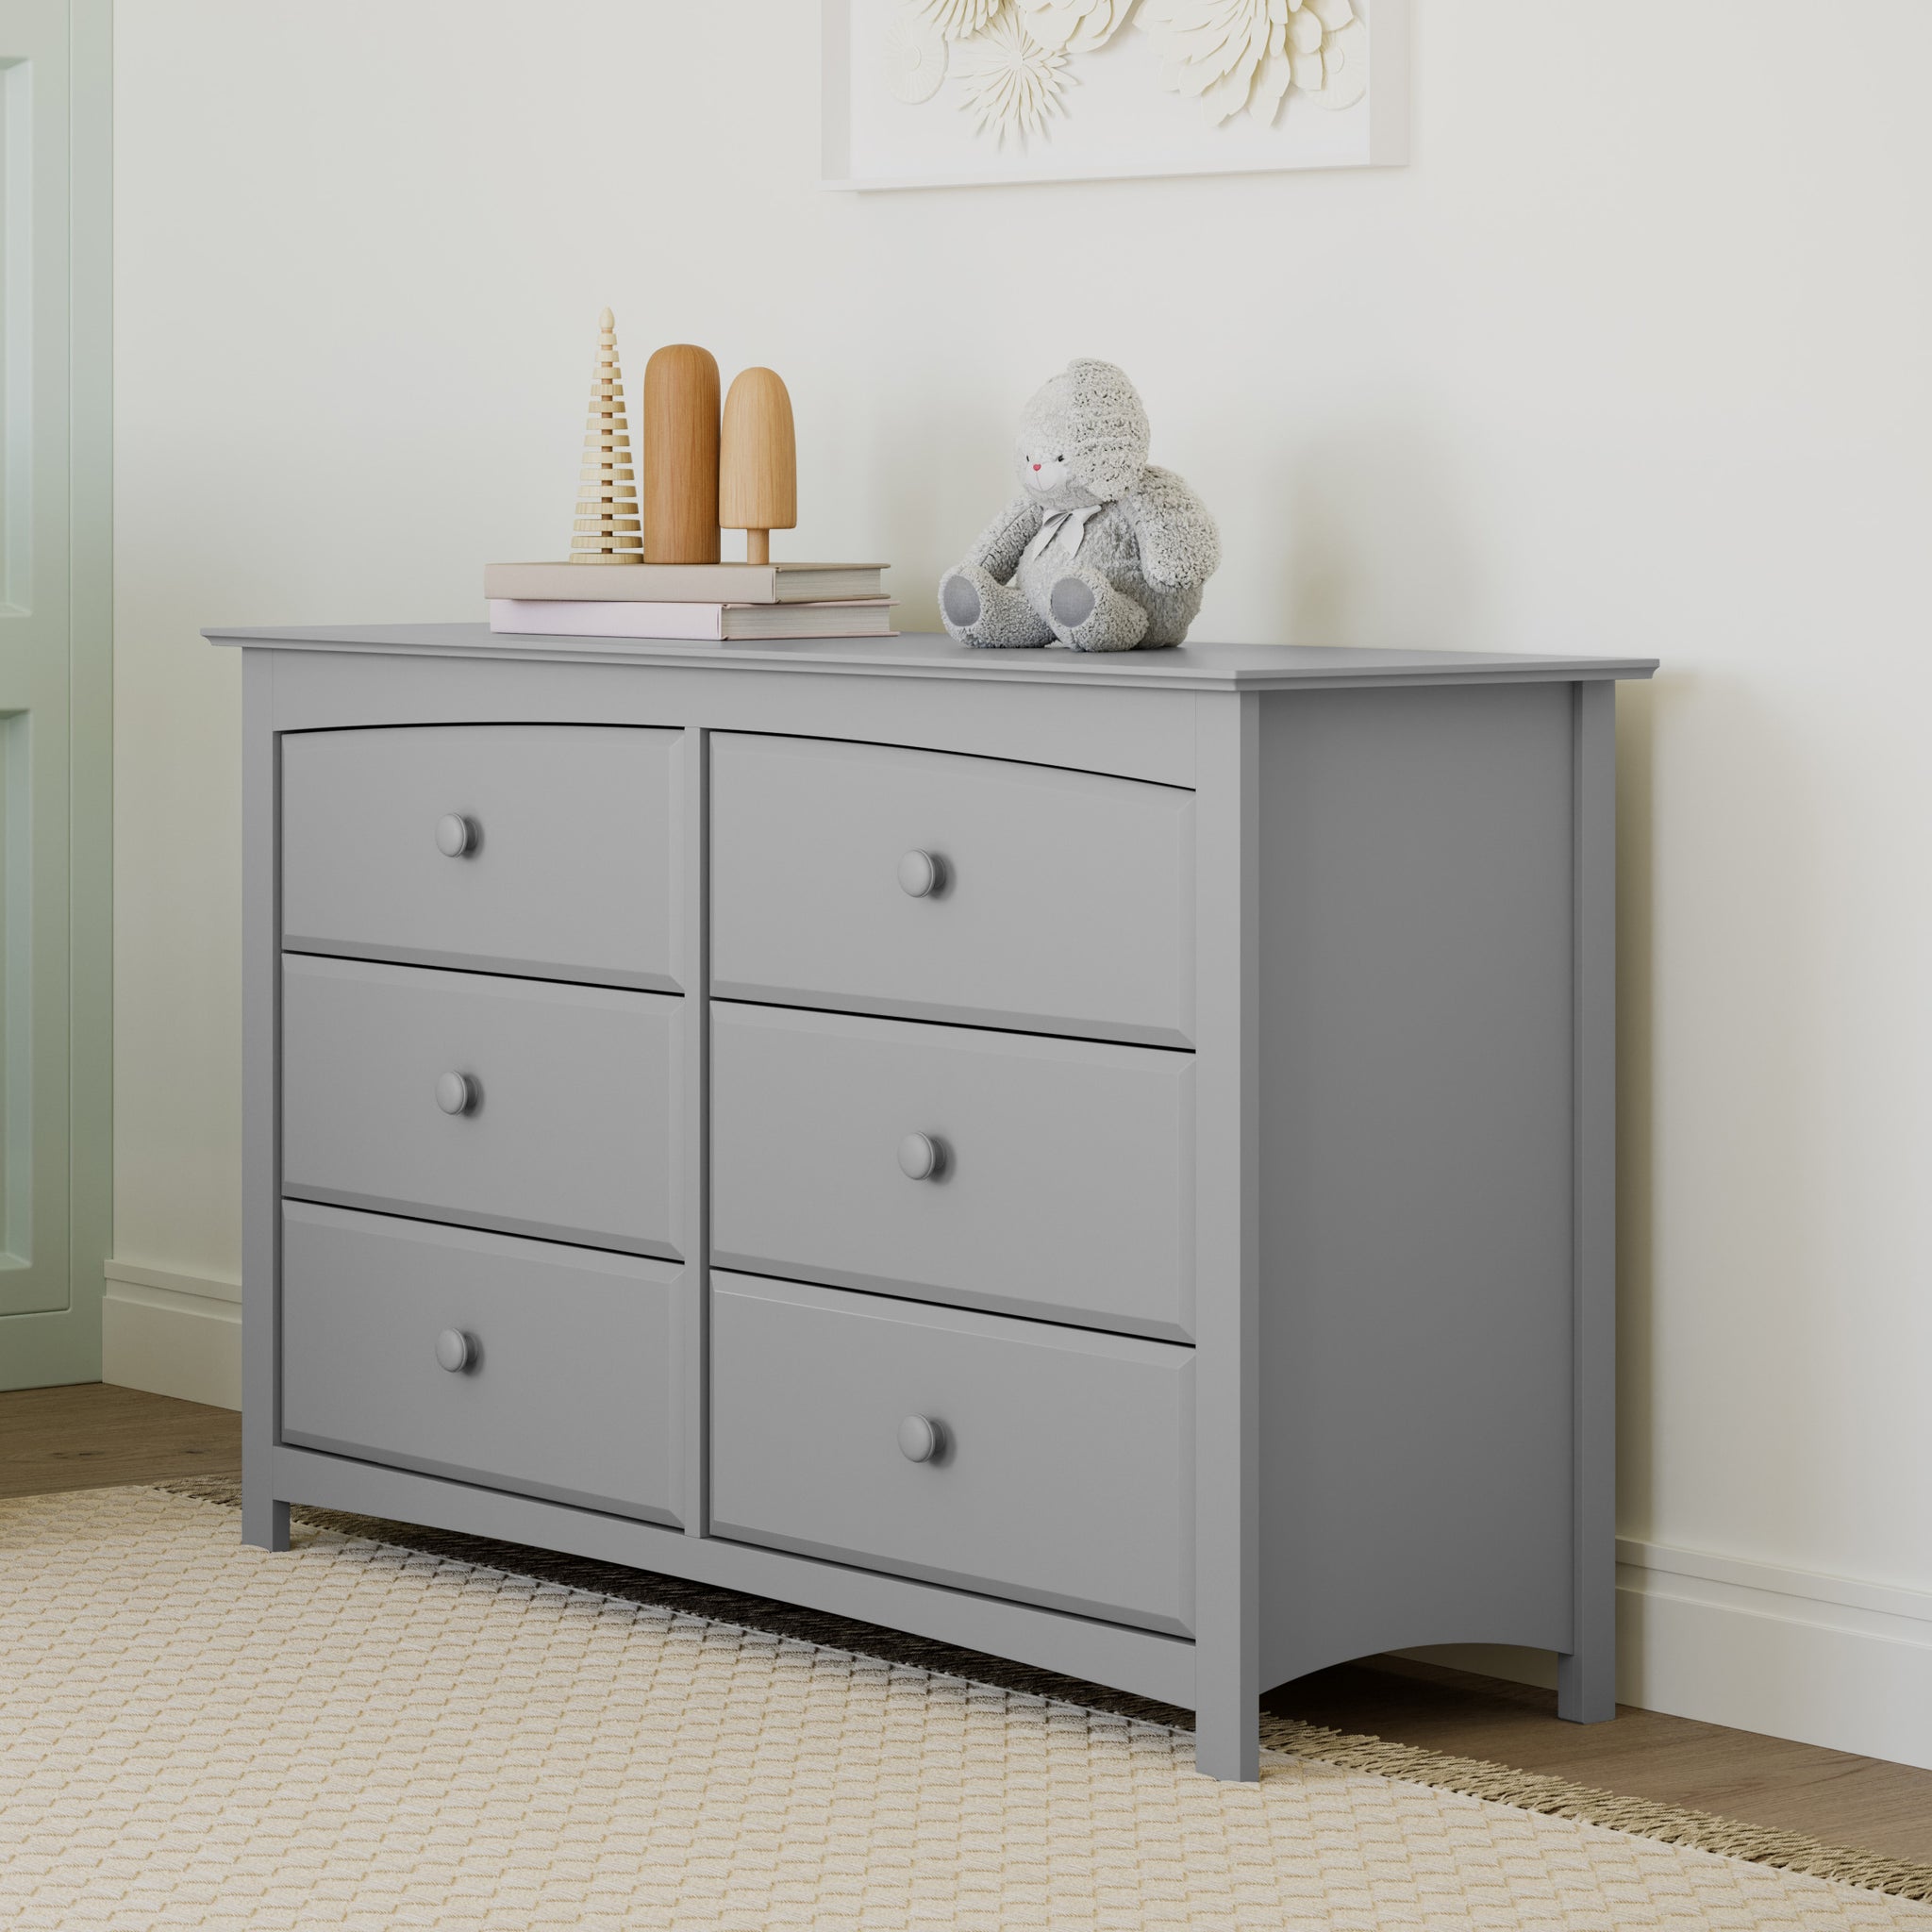 Pebble gray 6 drawer dresser in nursery angled